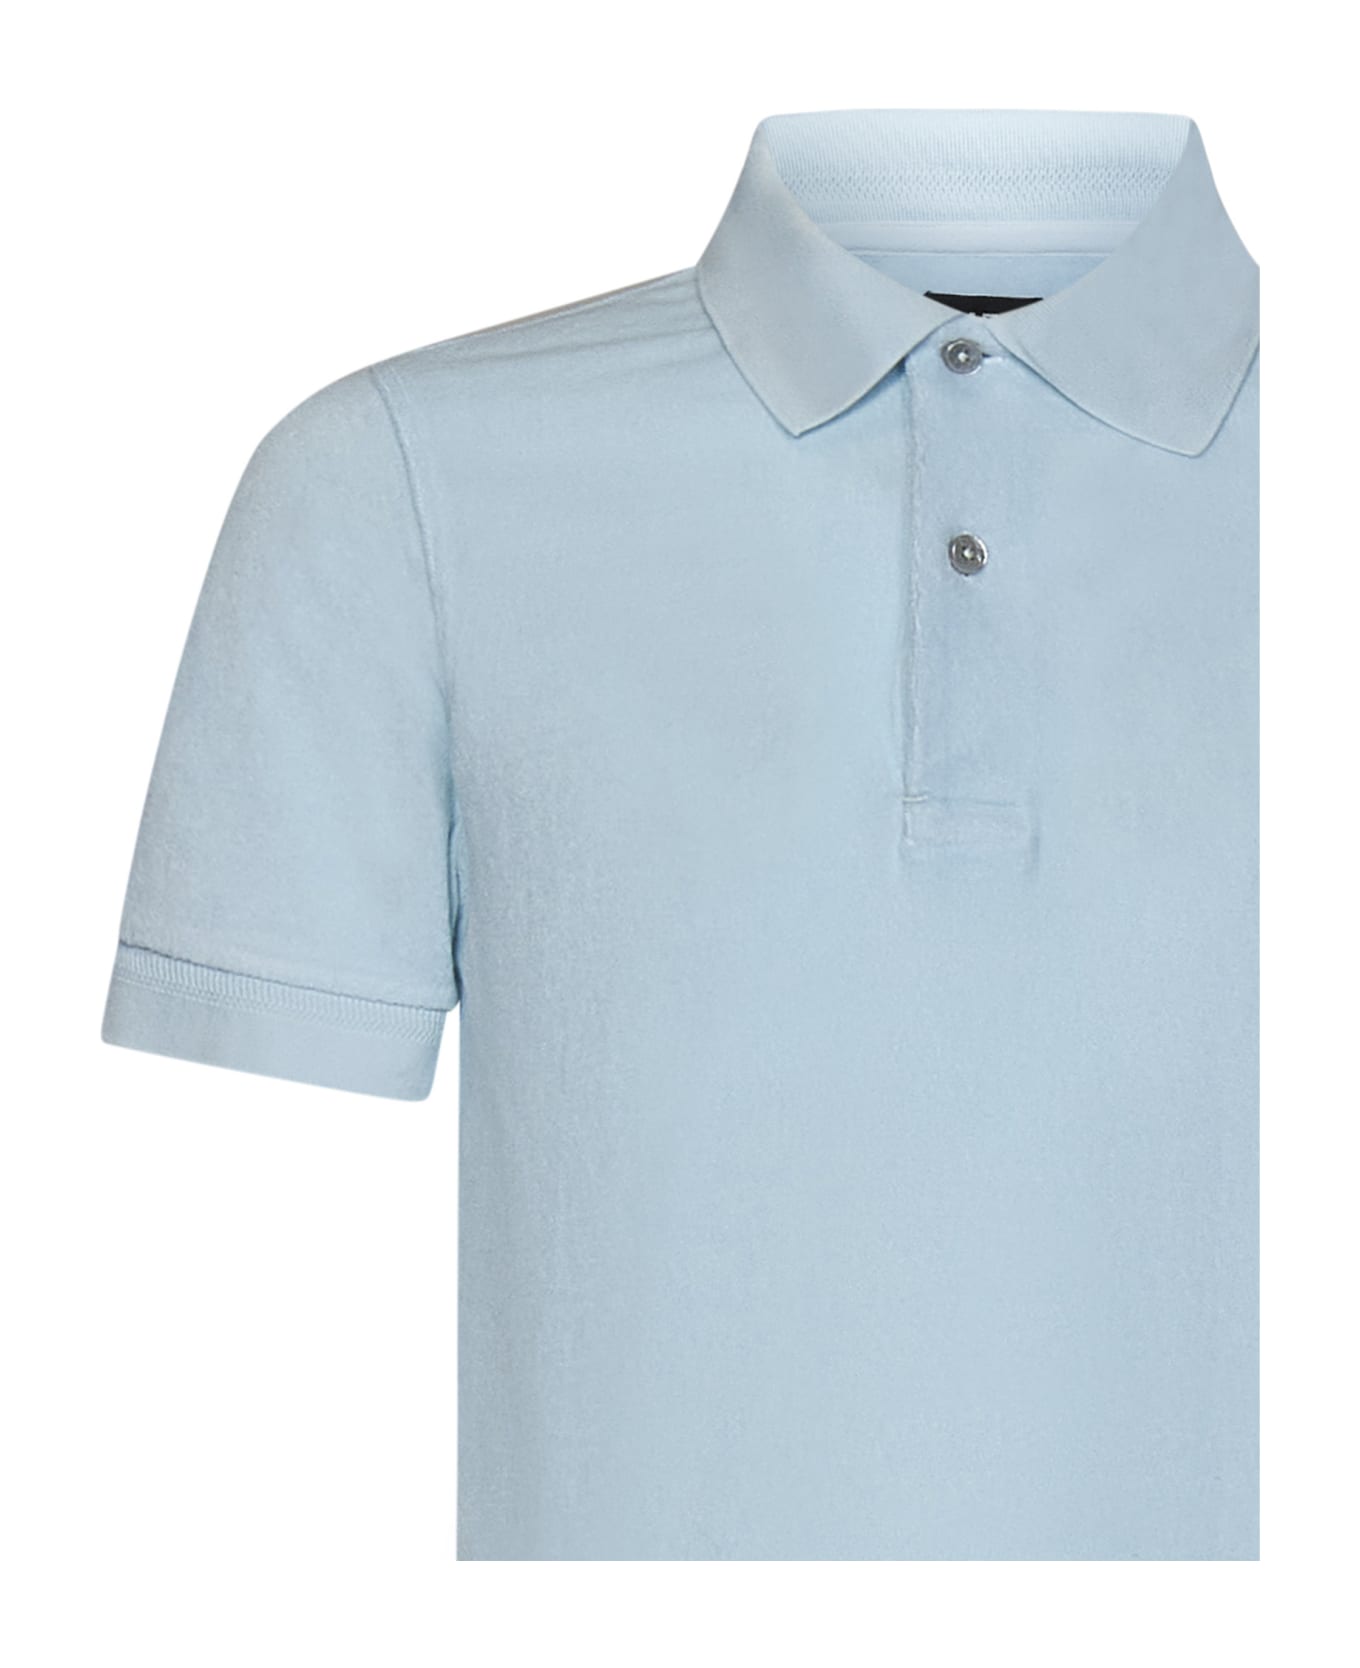 Tom Ford Polo Shirt - Blue